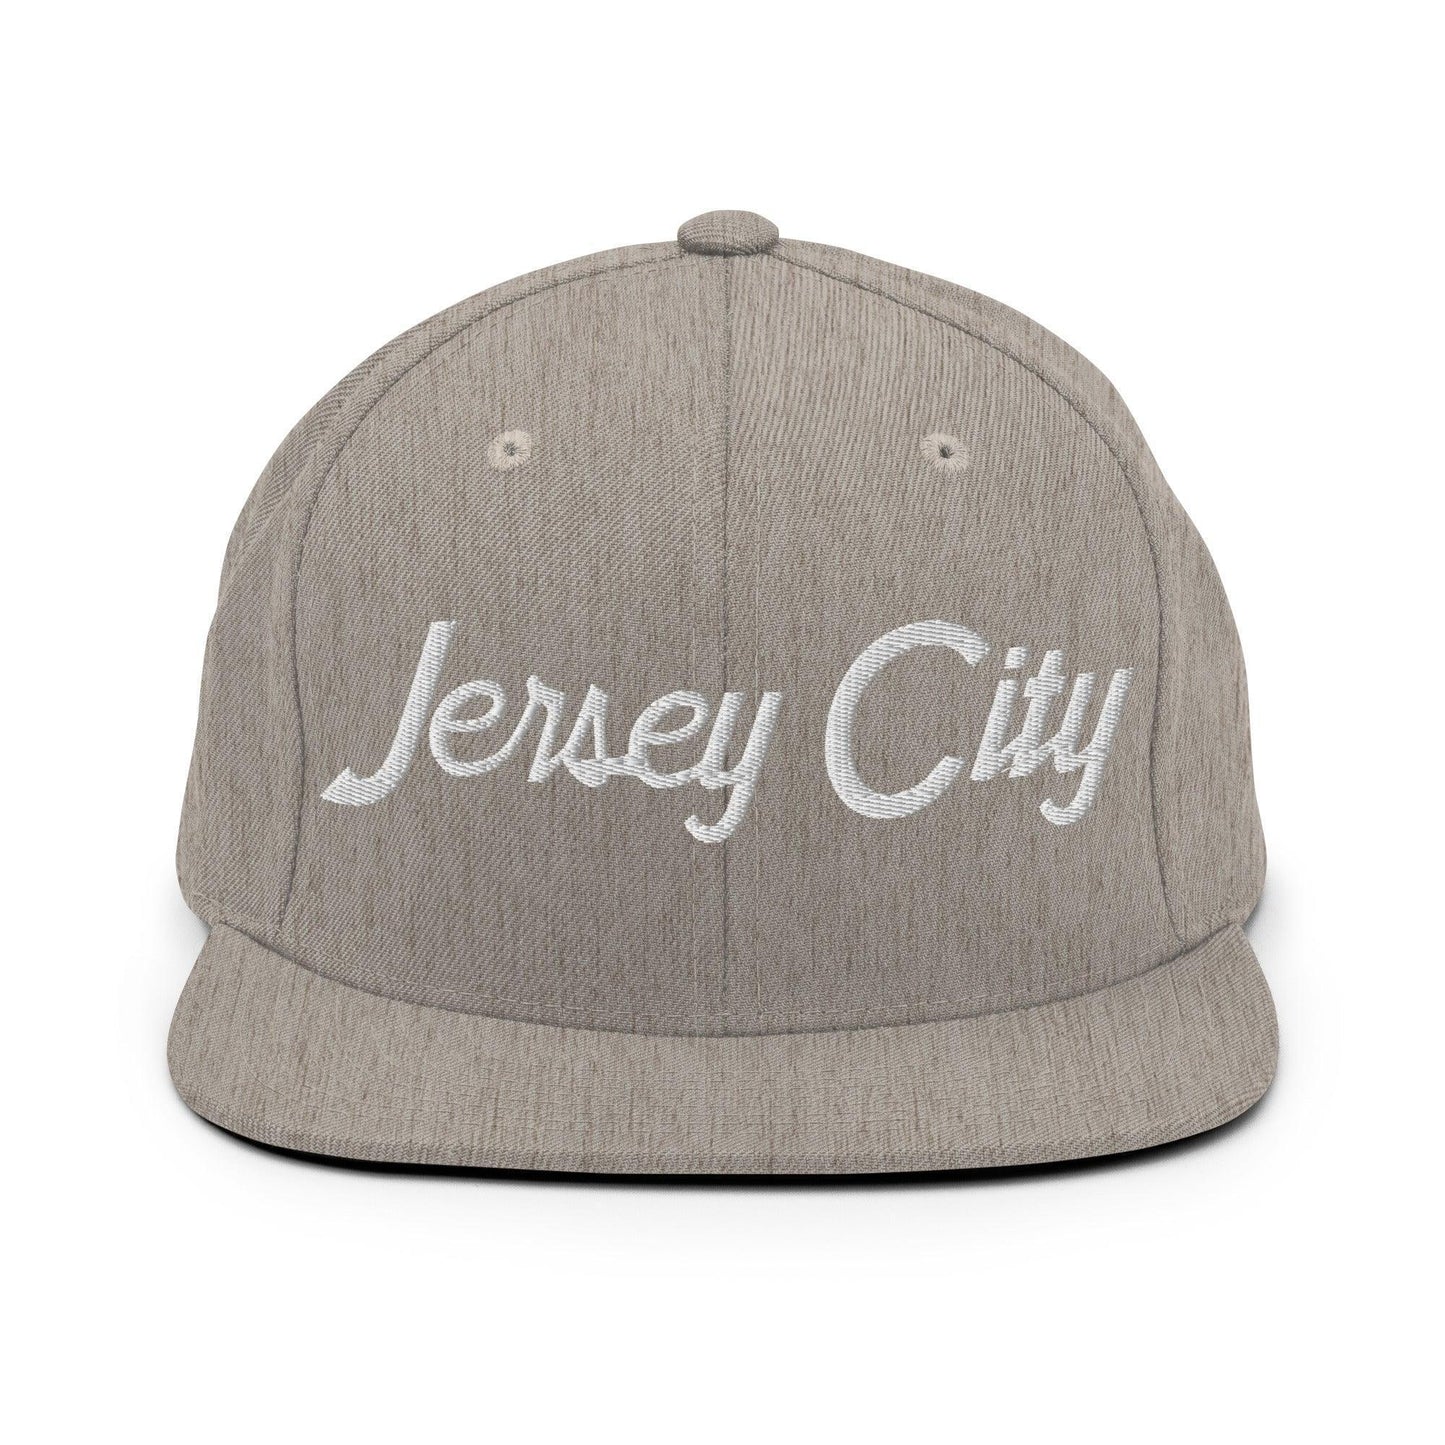 Jersey City Script Snapback Hat Heather Grey